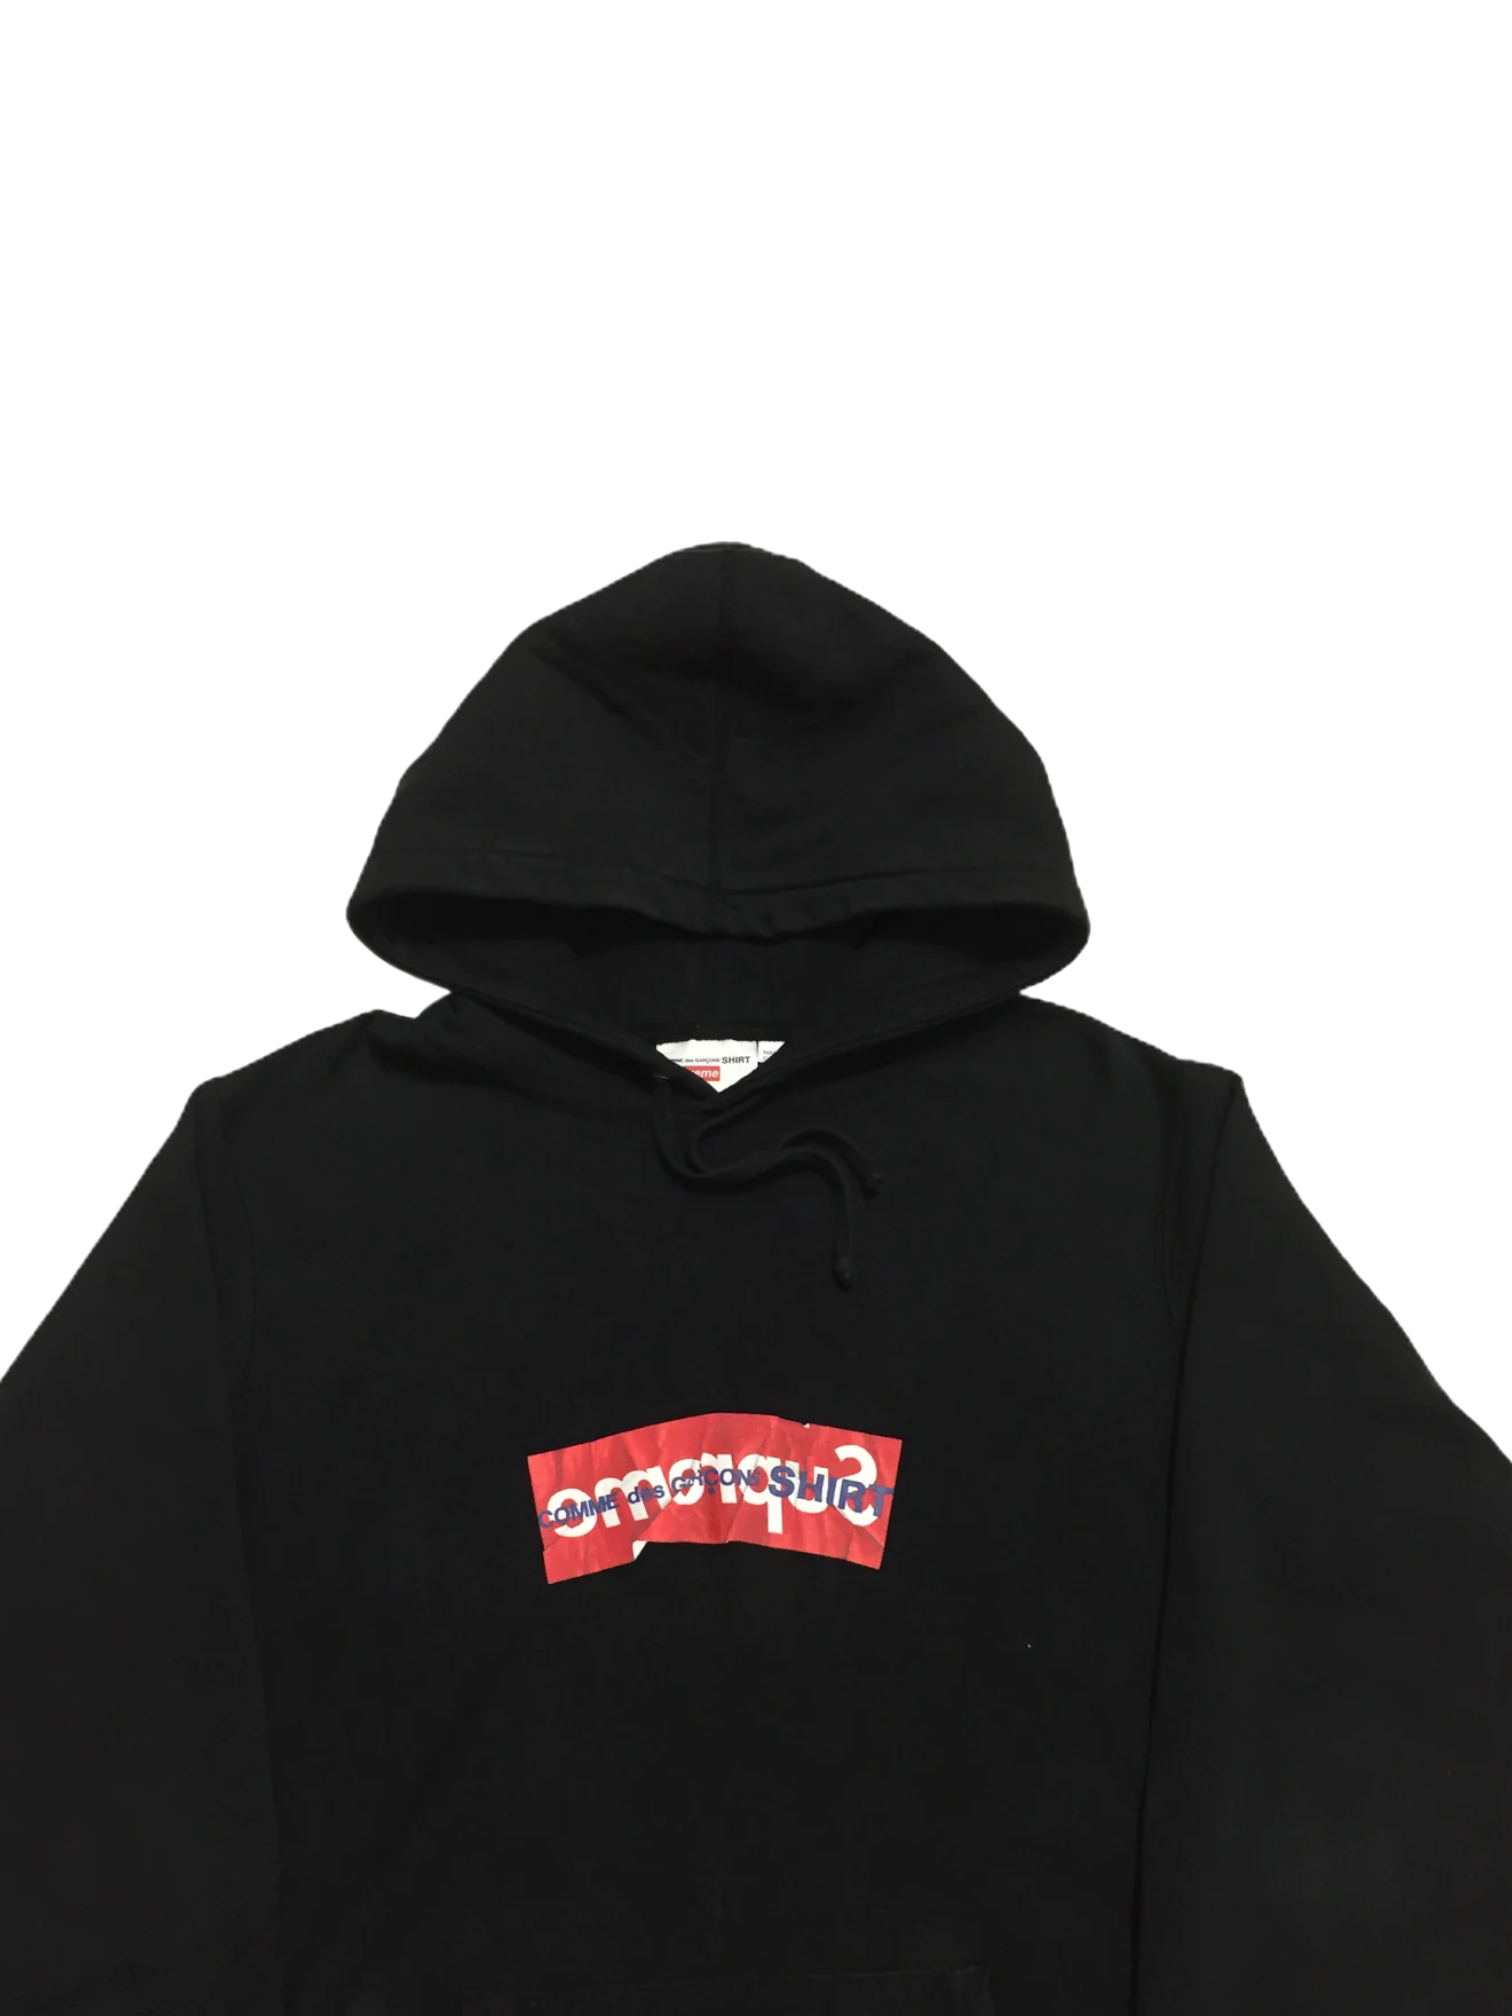 2017 Supreme x CDG Black Box Logo Hoodie